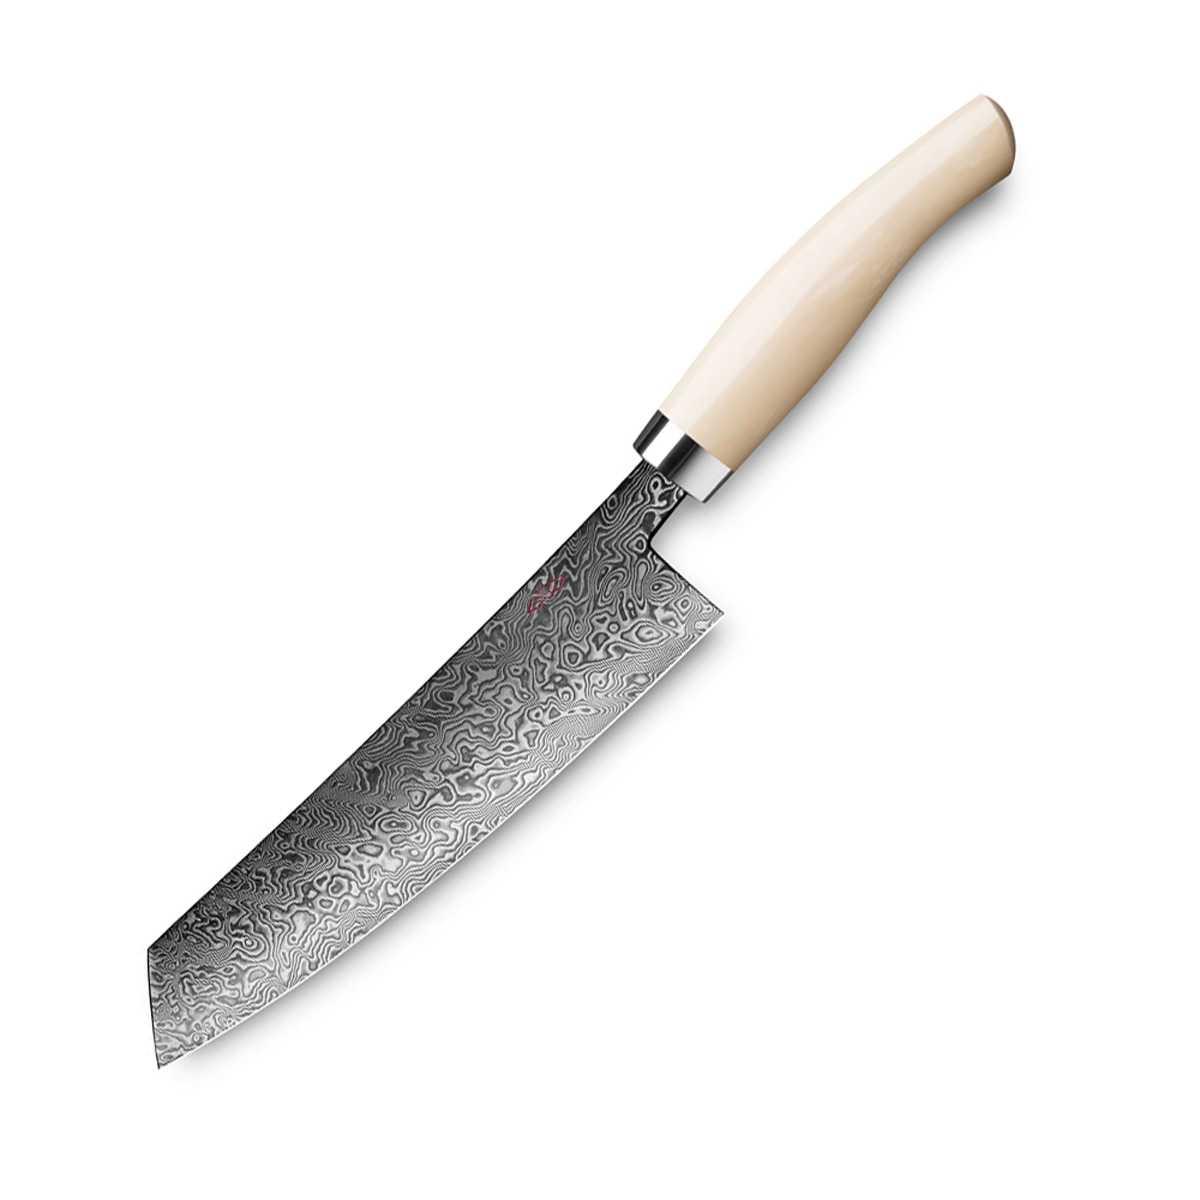 Nesmuk Exklusiv C90 Damast Kochmesser 18 cm mit Griff aus Juma Ivory